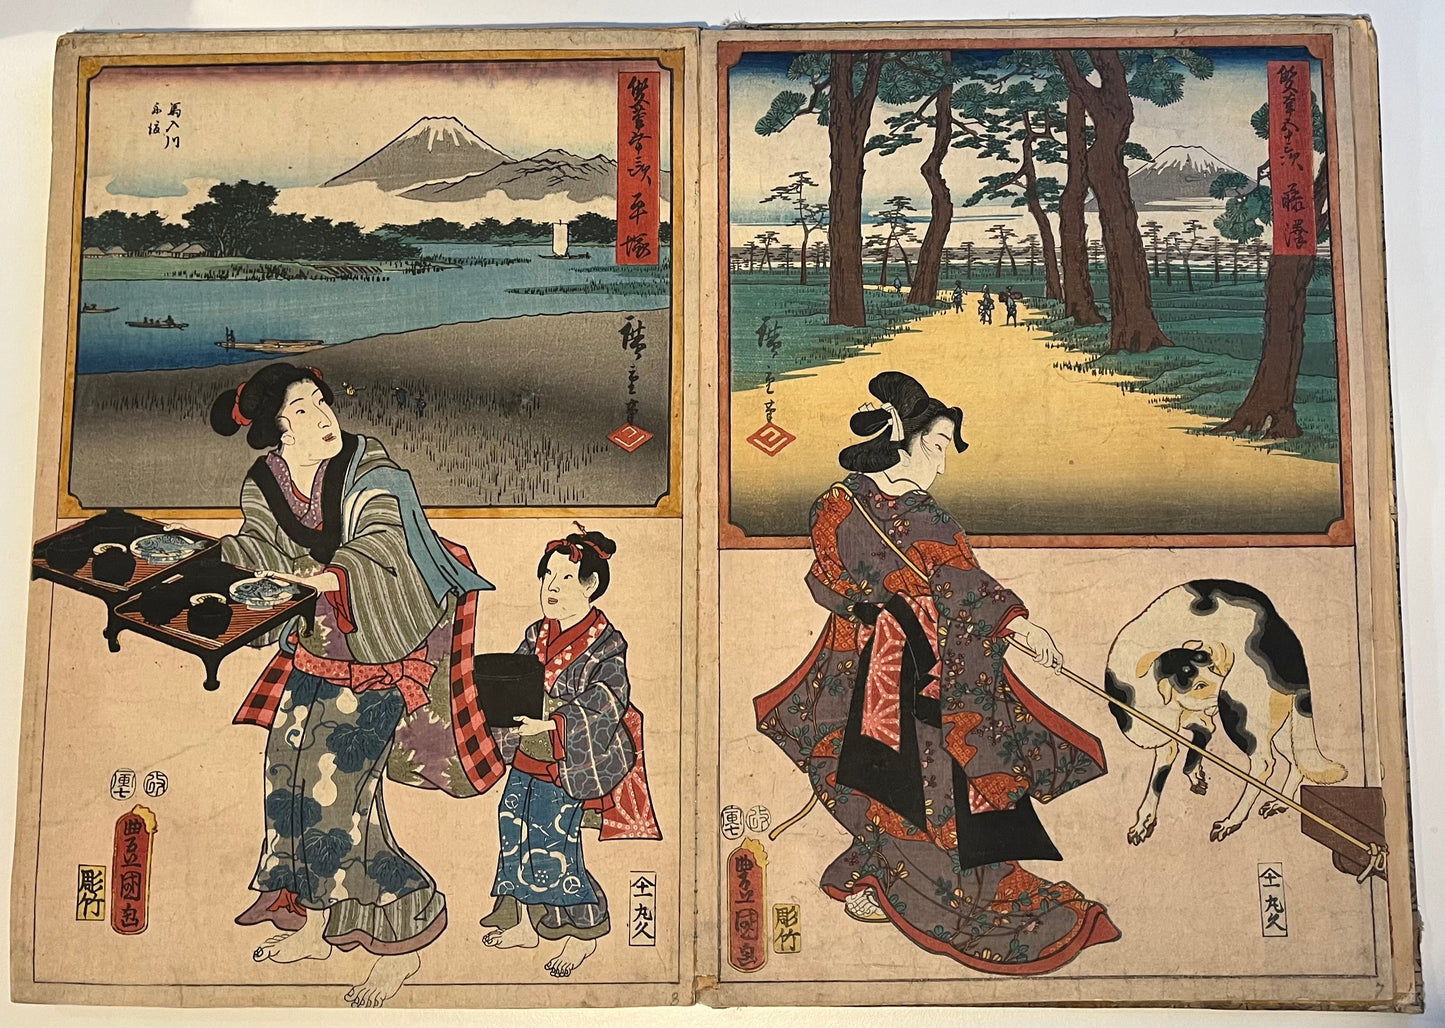 Hiroshige & Kunisada - Complete album of 55 prints - "Two Brushes" 53 stations of the Tokaido road - 1854-7 publisher Maruya Kyūshirõ